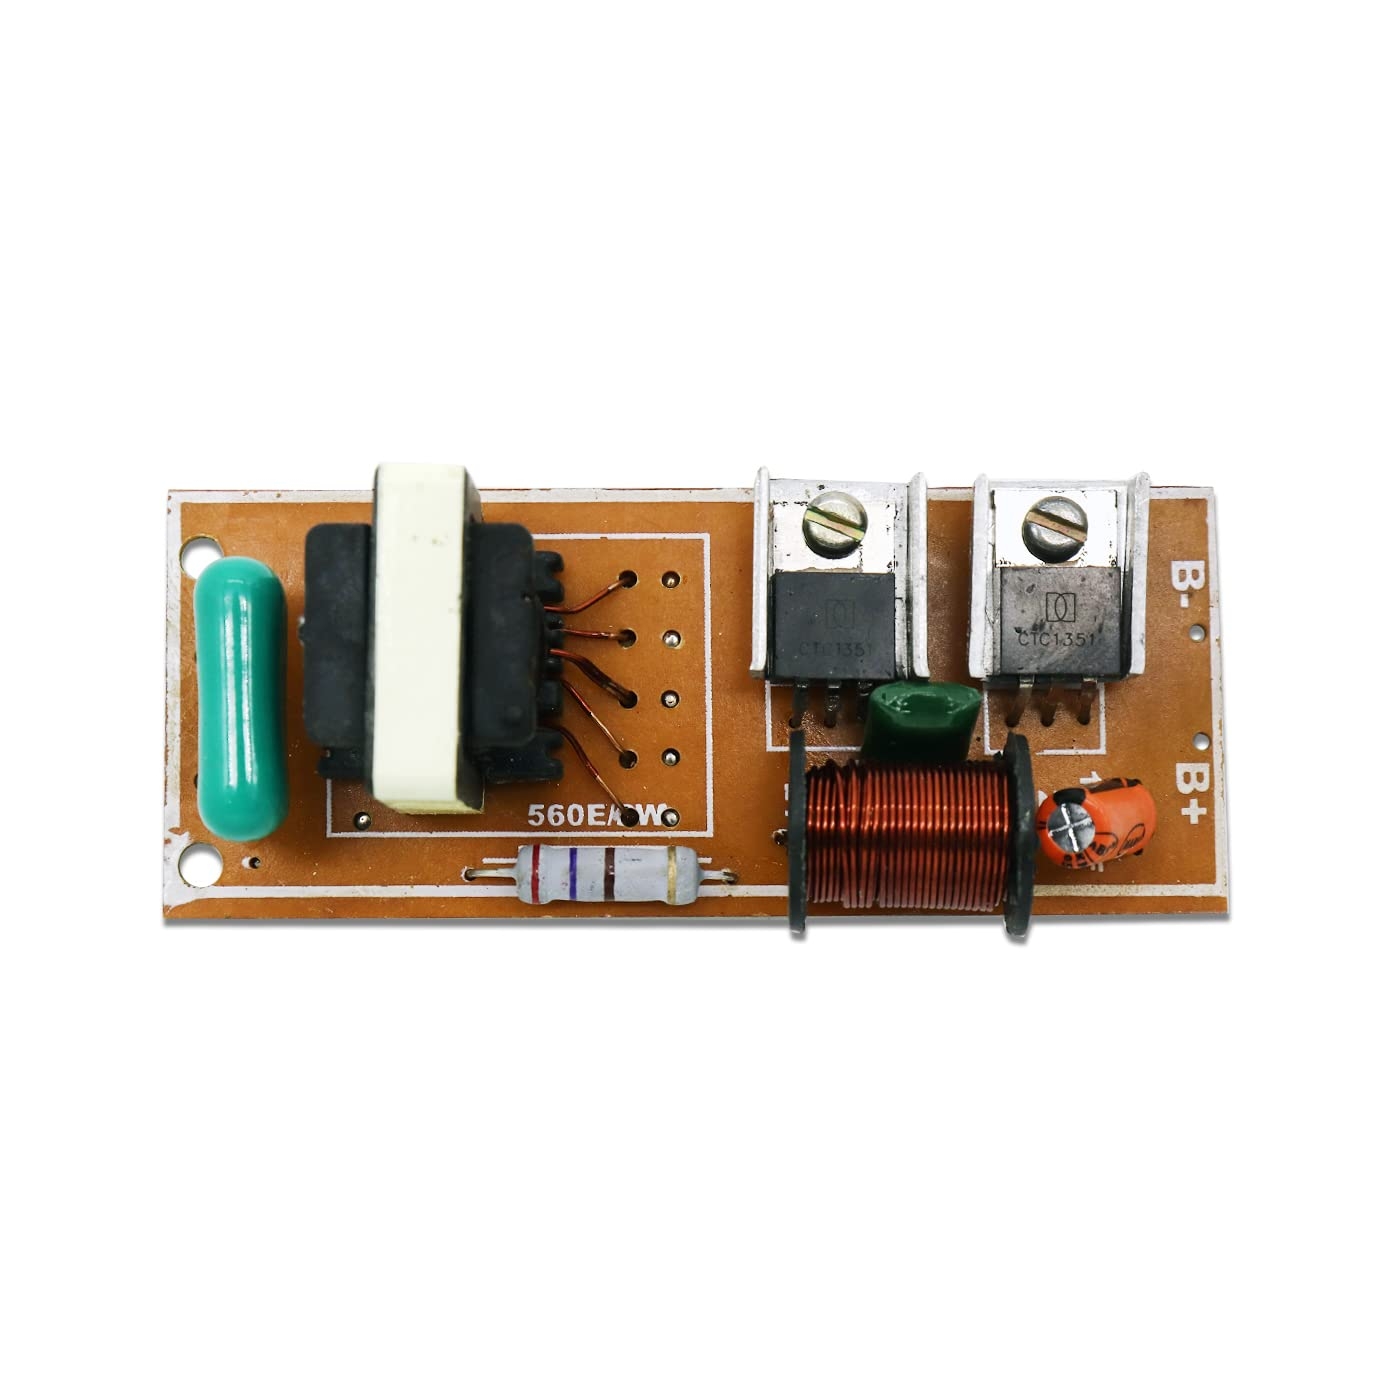 12v Dc to 220v Ac 40 Watt Convertor Circuit Board 88mm X 36mm X 27mm (Dc to Ac Convertor)